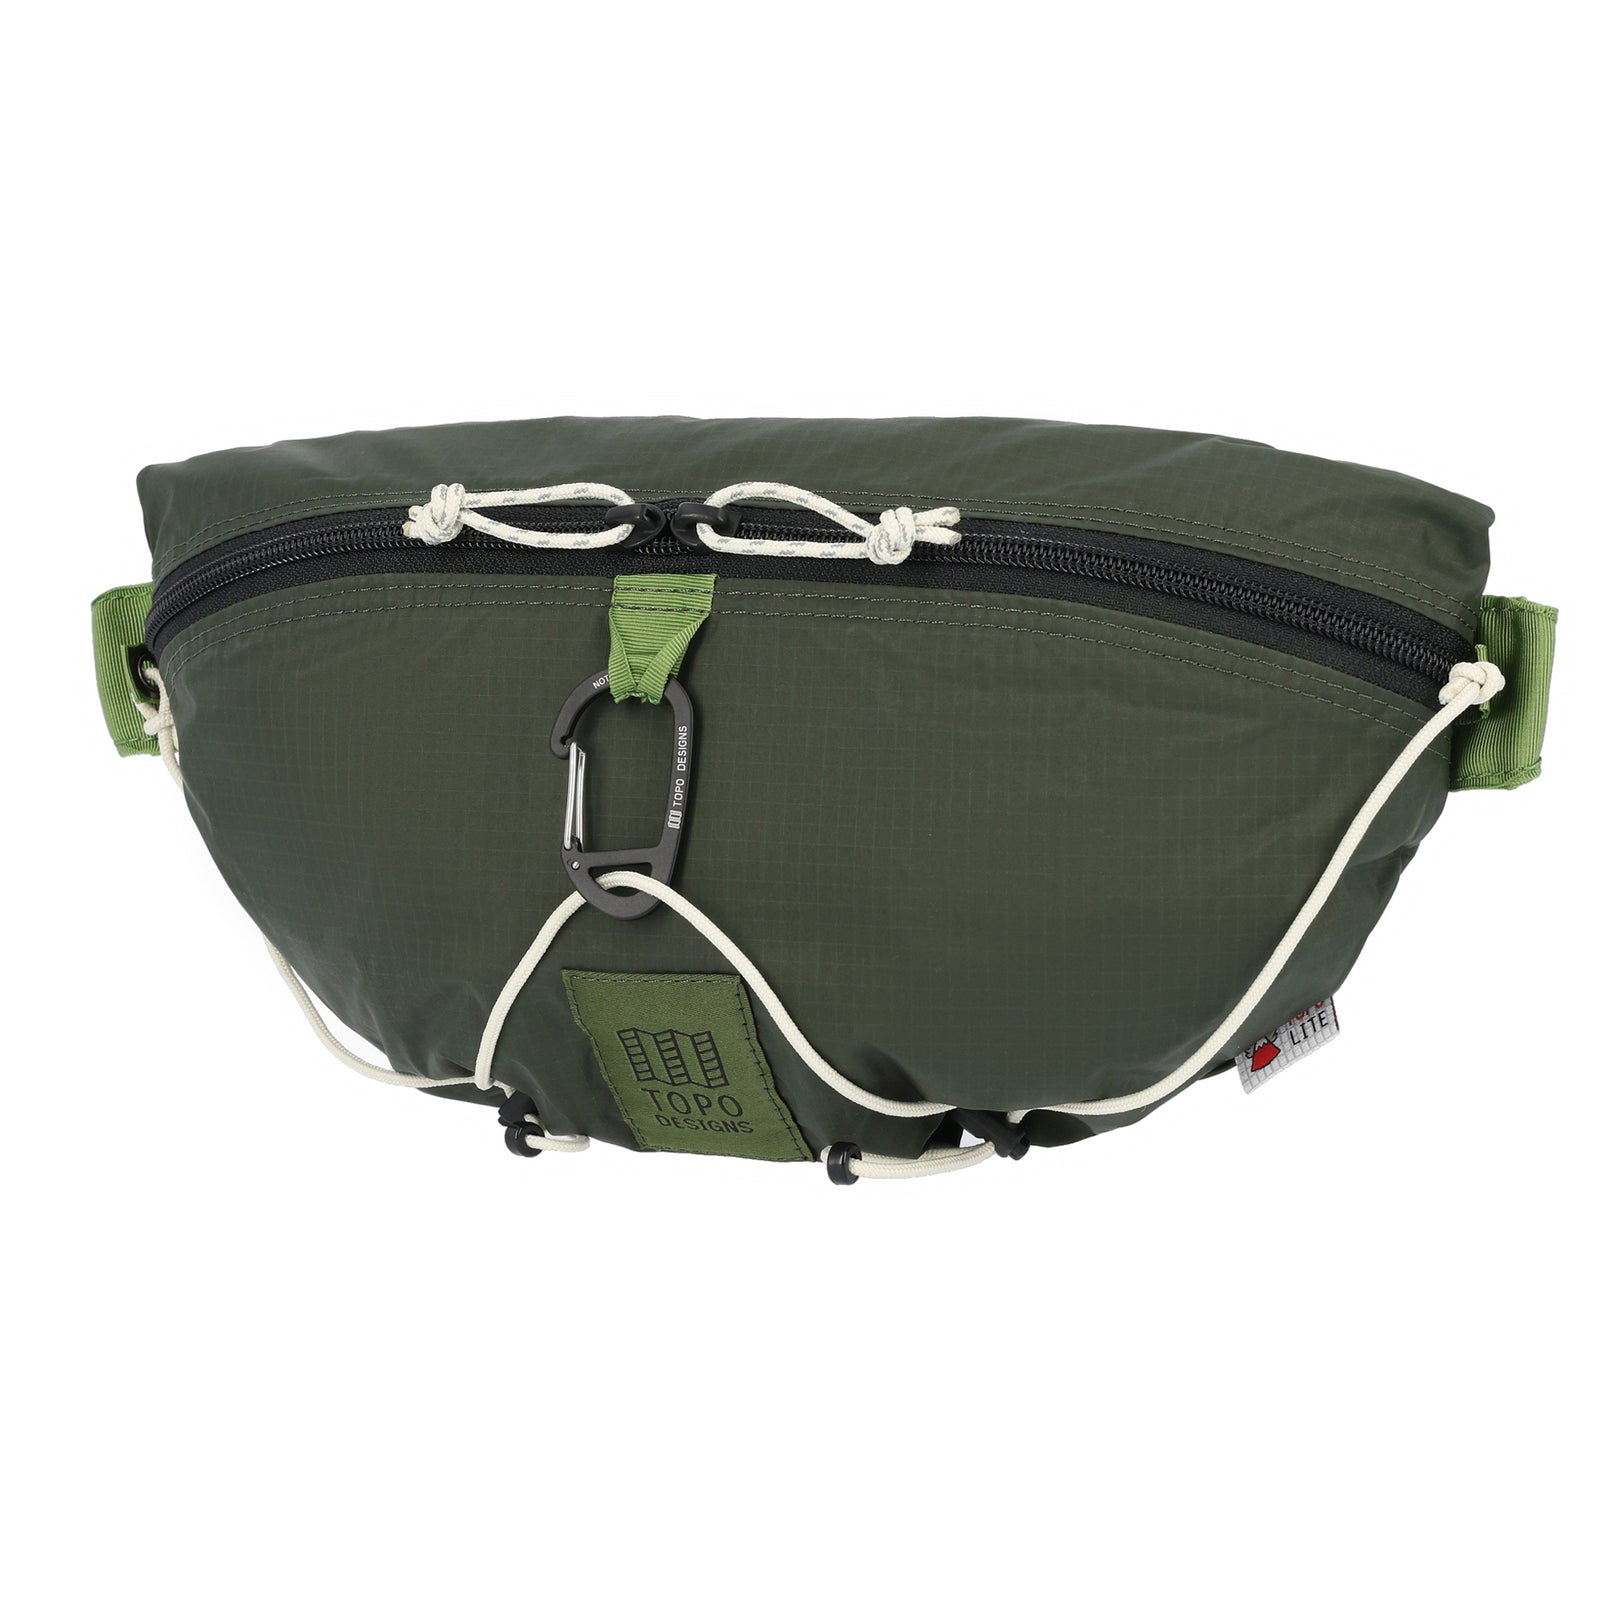 Topo Designs TopoLite Hip Pack Ultralight fanny pack crossbody bum bag in "olive" green.